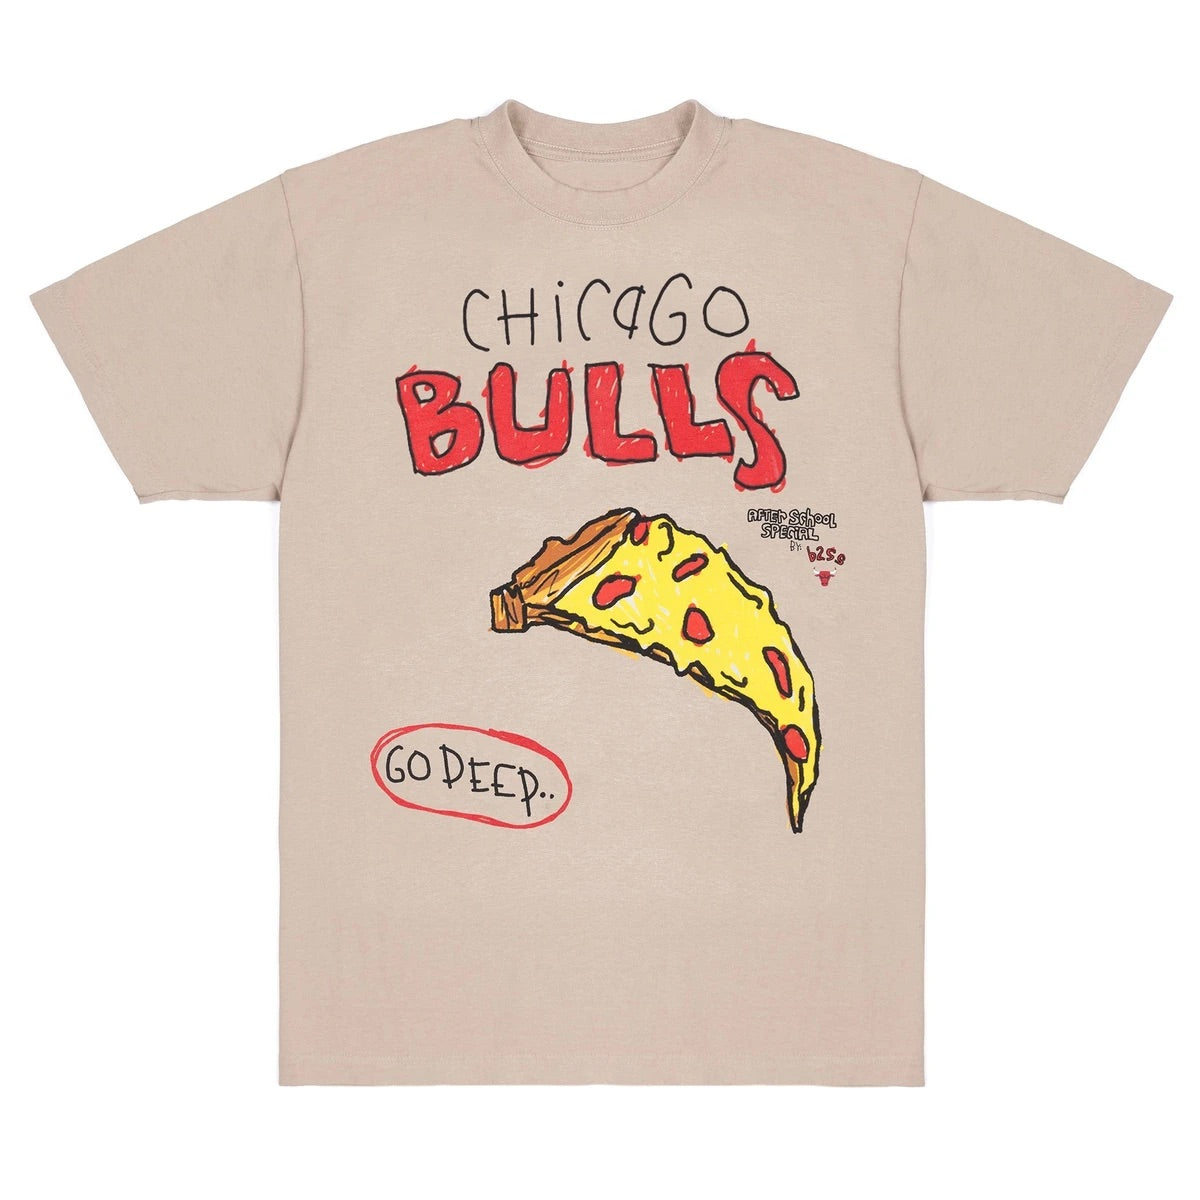 Chicago Bulls Graphic Tee